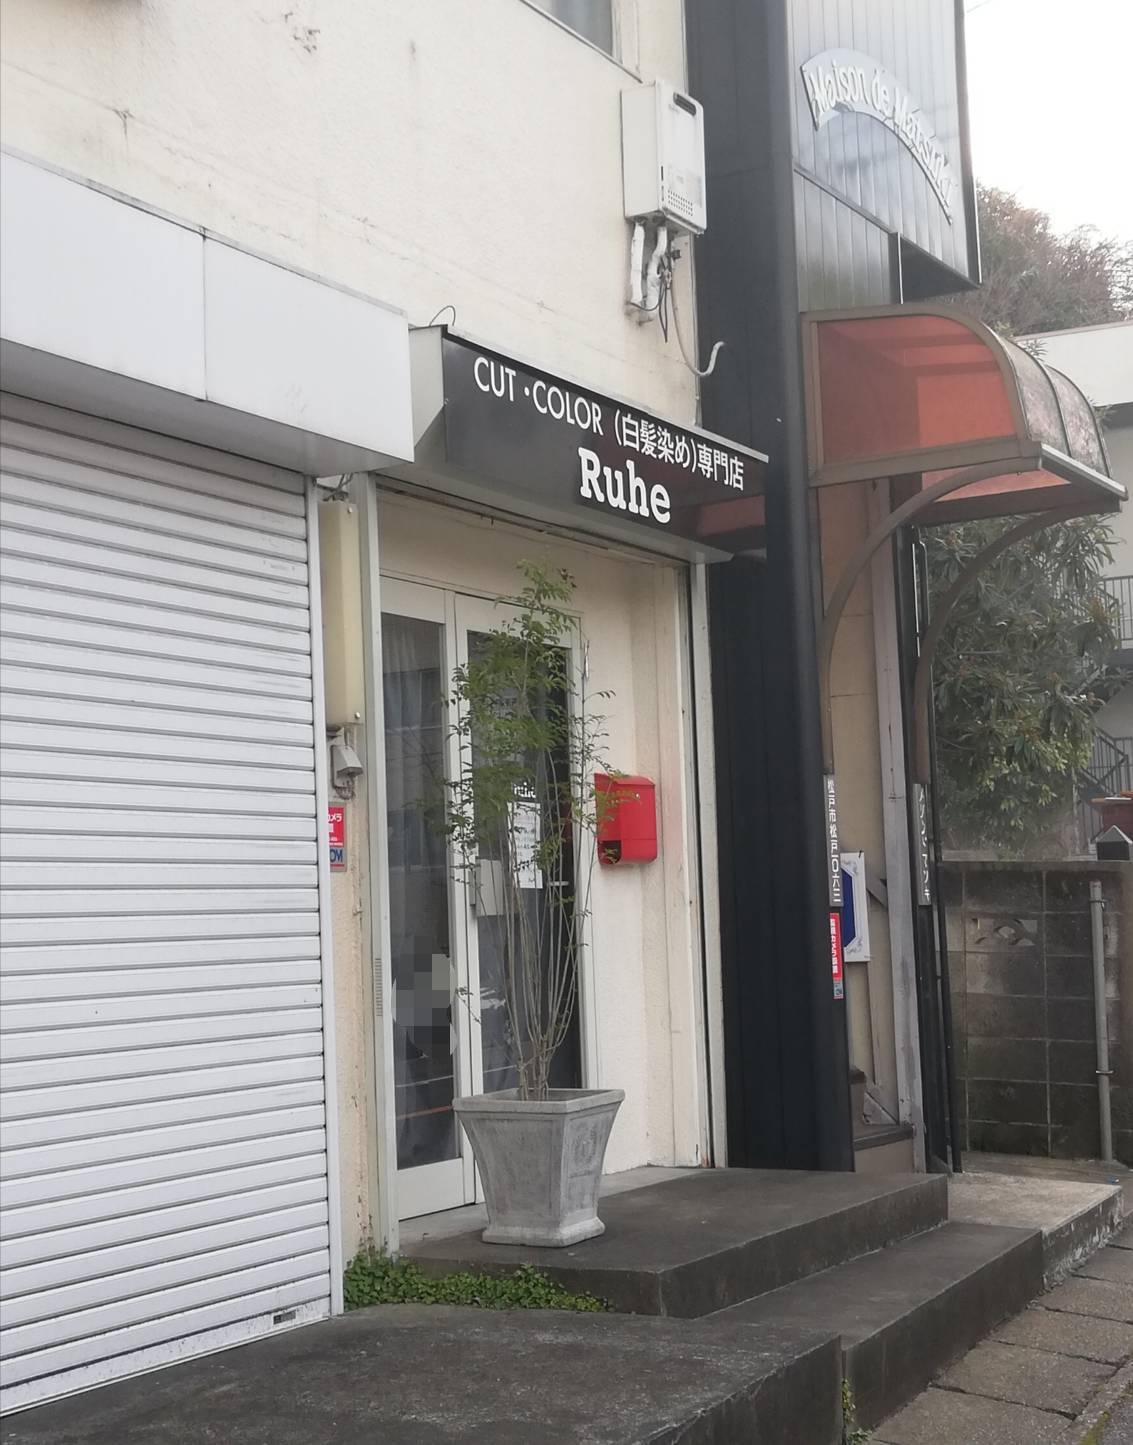 Ruheカットカラー専門店美容室閉店